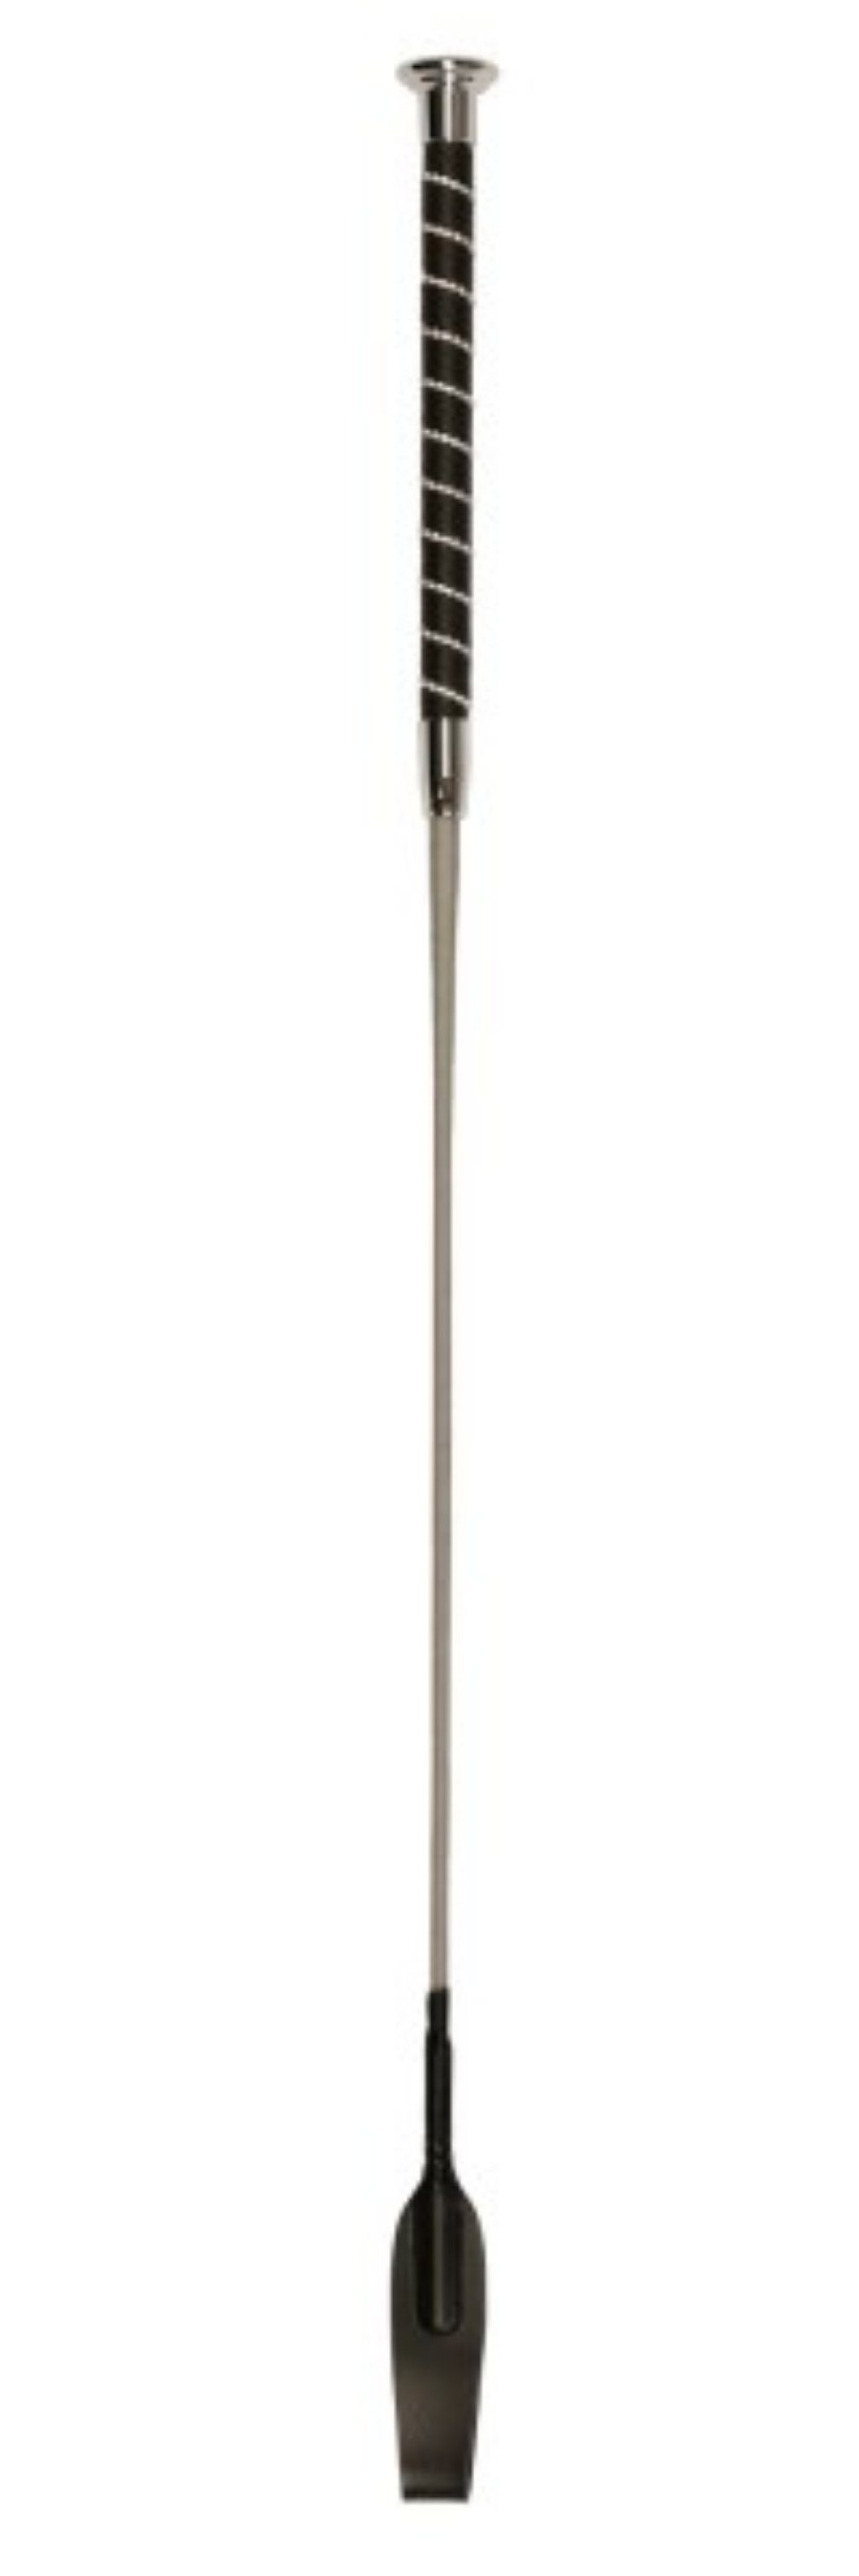 Kerbl Springgerte Springgerte mit Klatsche 65 cm silber 320103, 1-tlg.